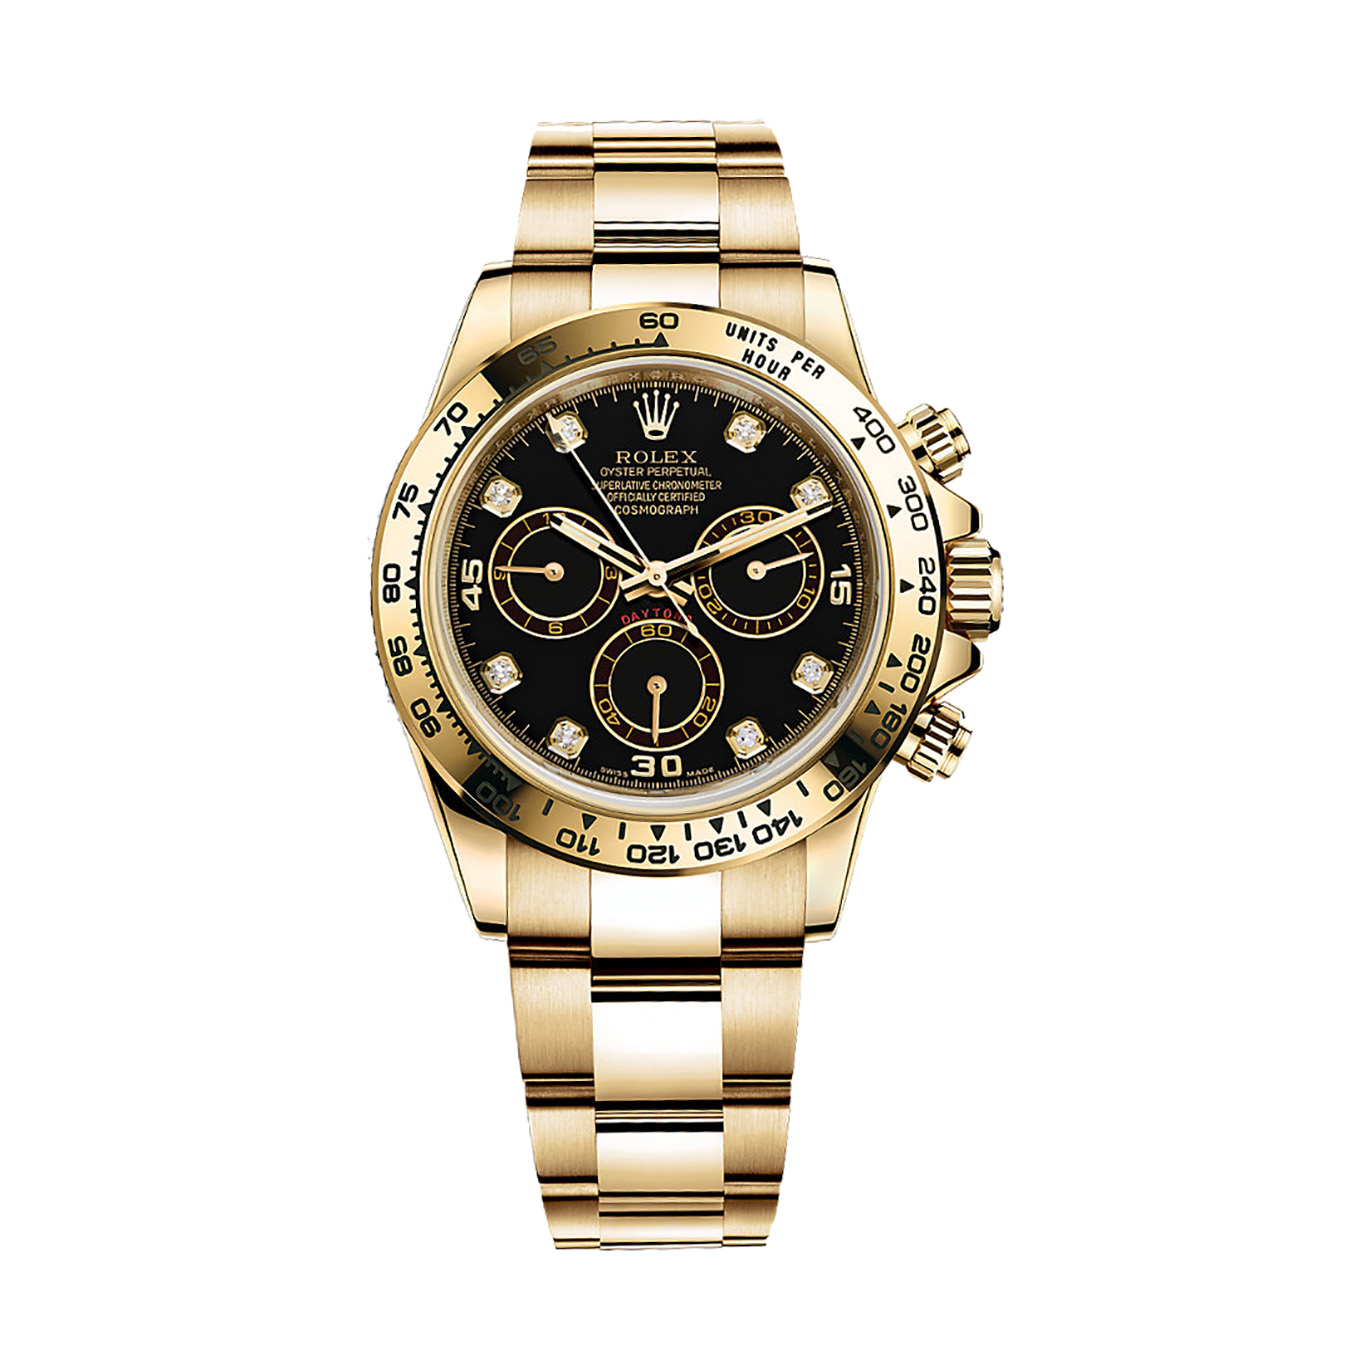 Cosmograph Daytona 116508 Gold Watch (Black Set With Diamonds)